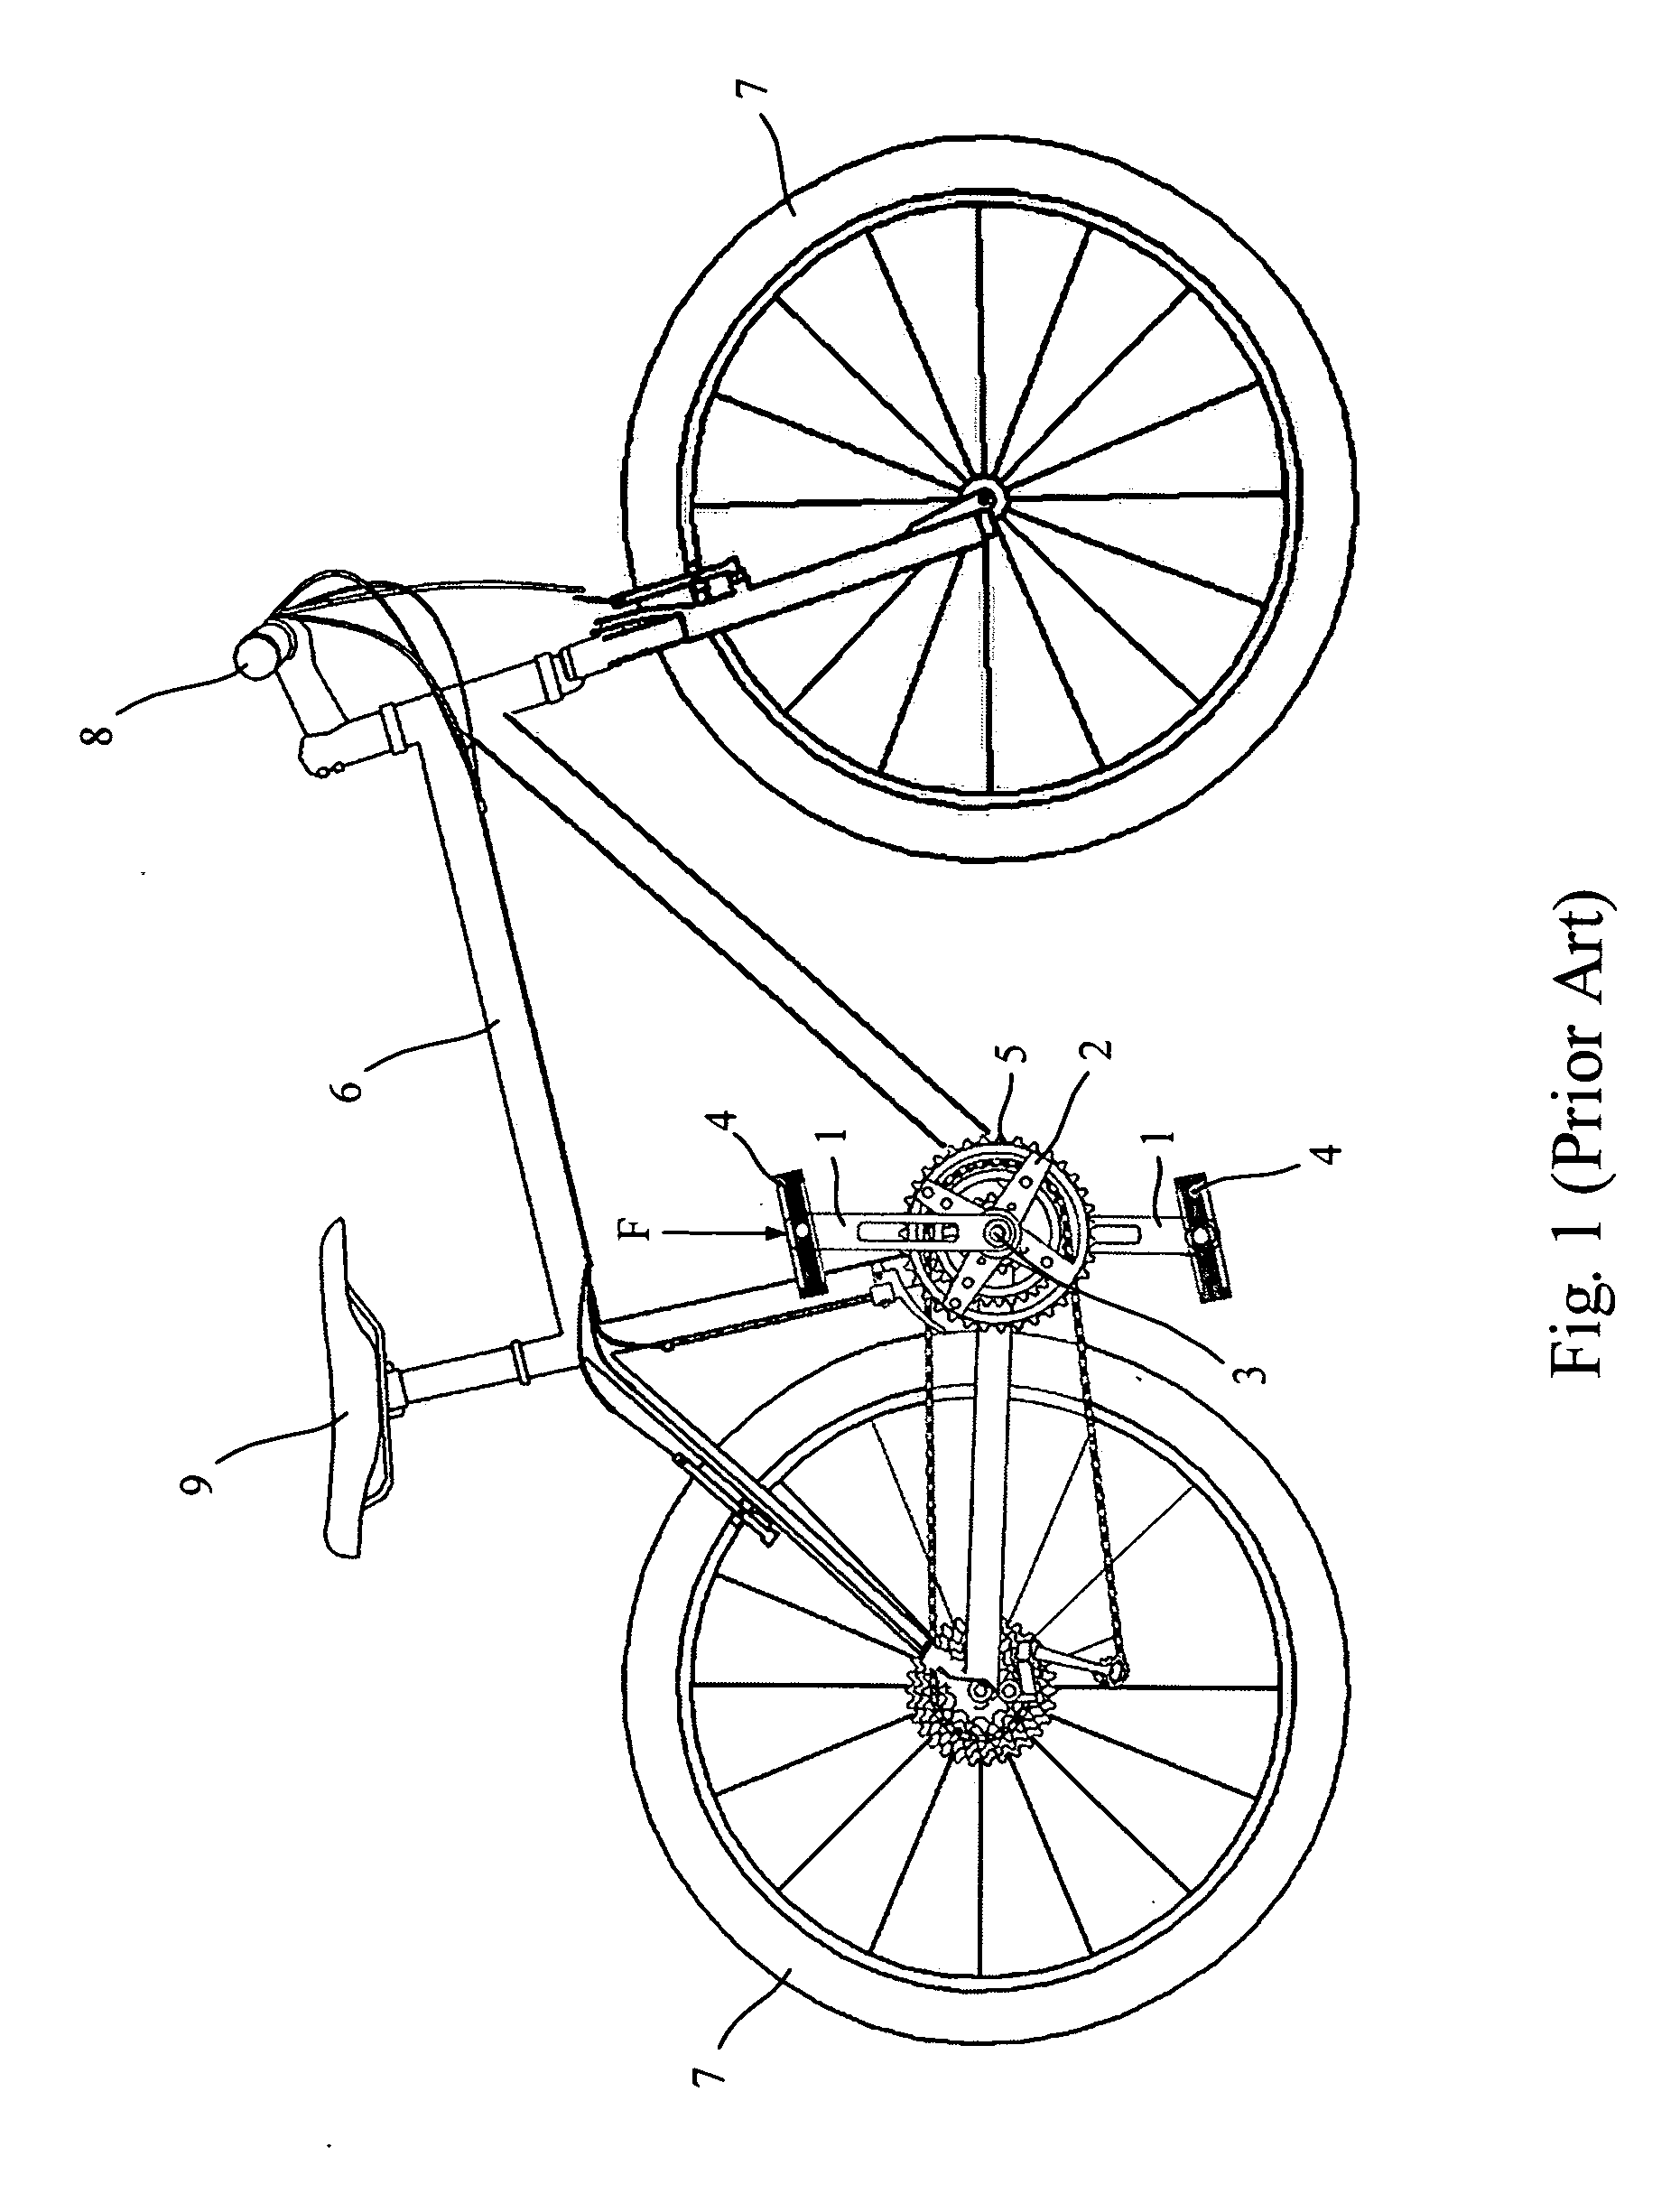 Effort-saving bicycle and transmission crank